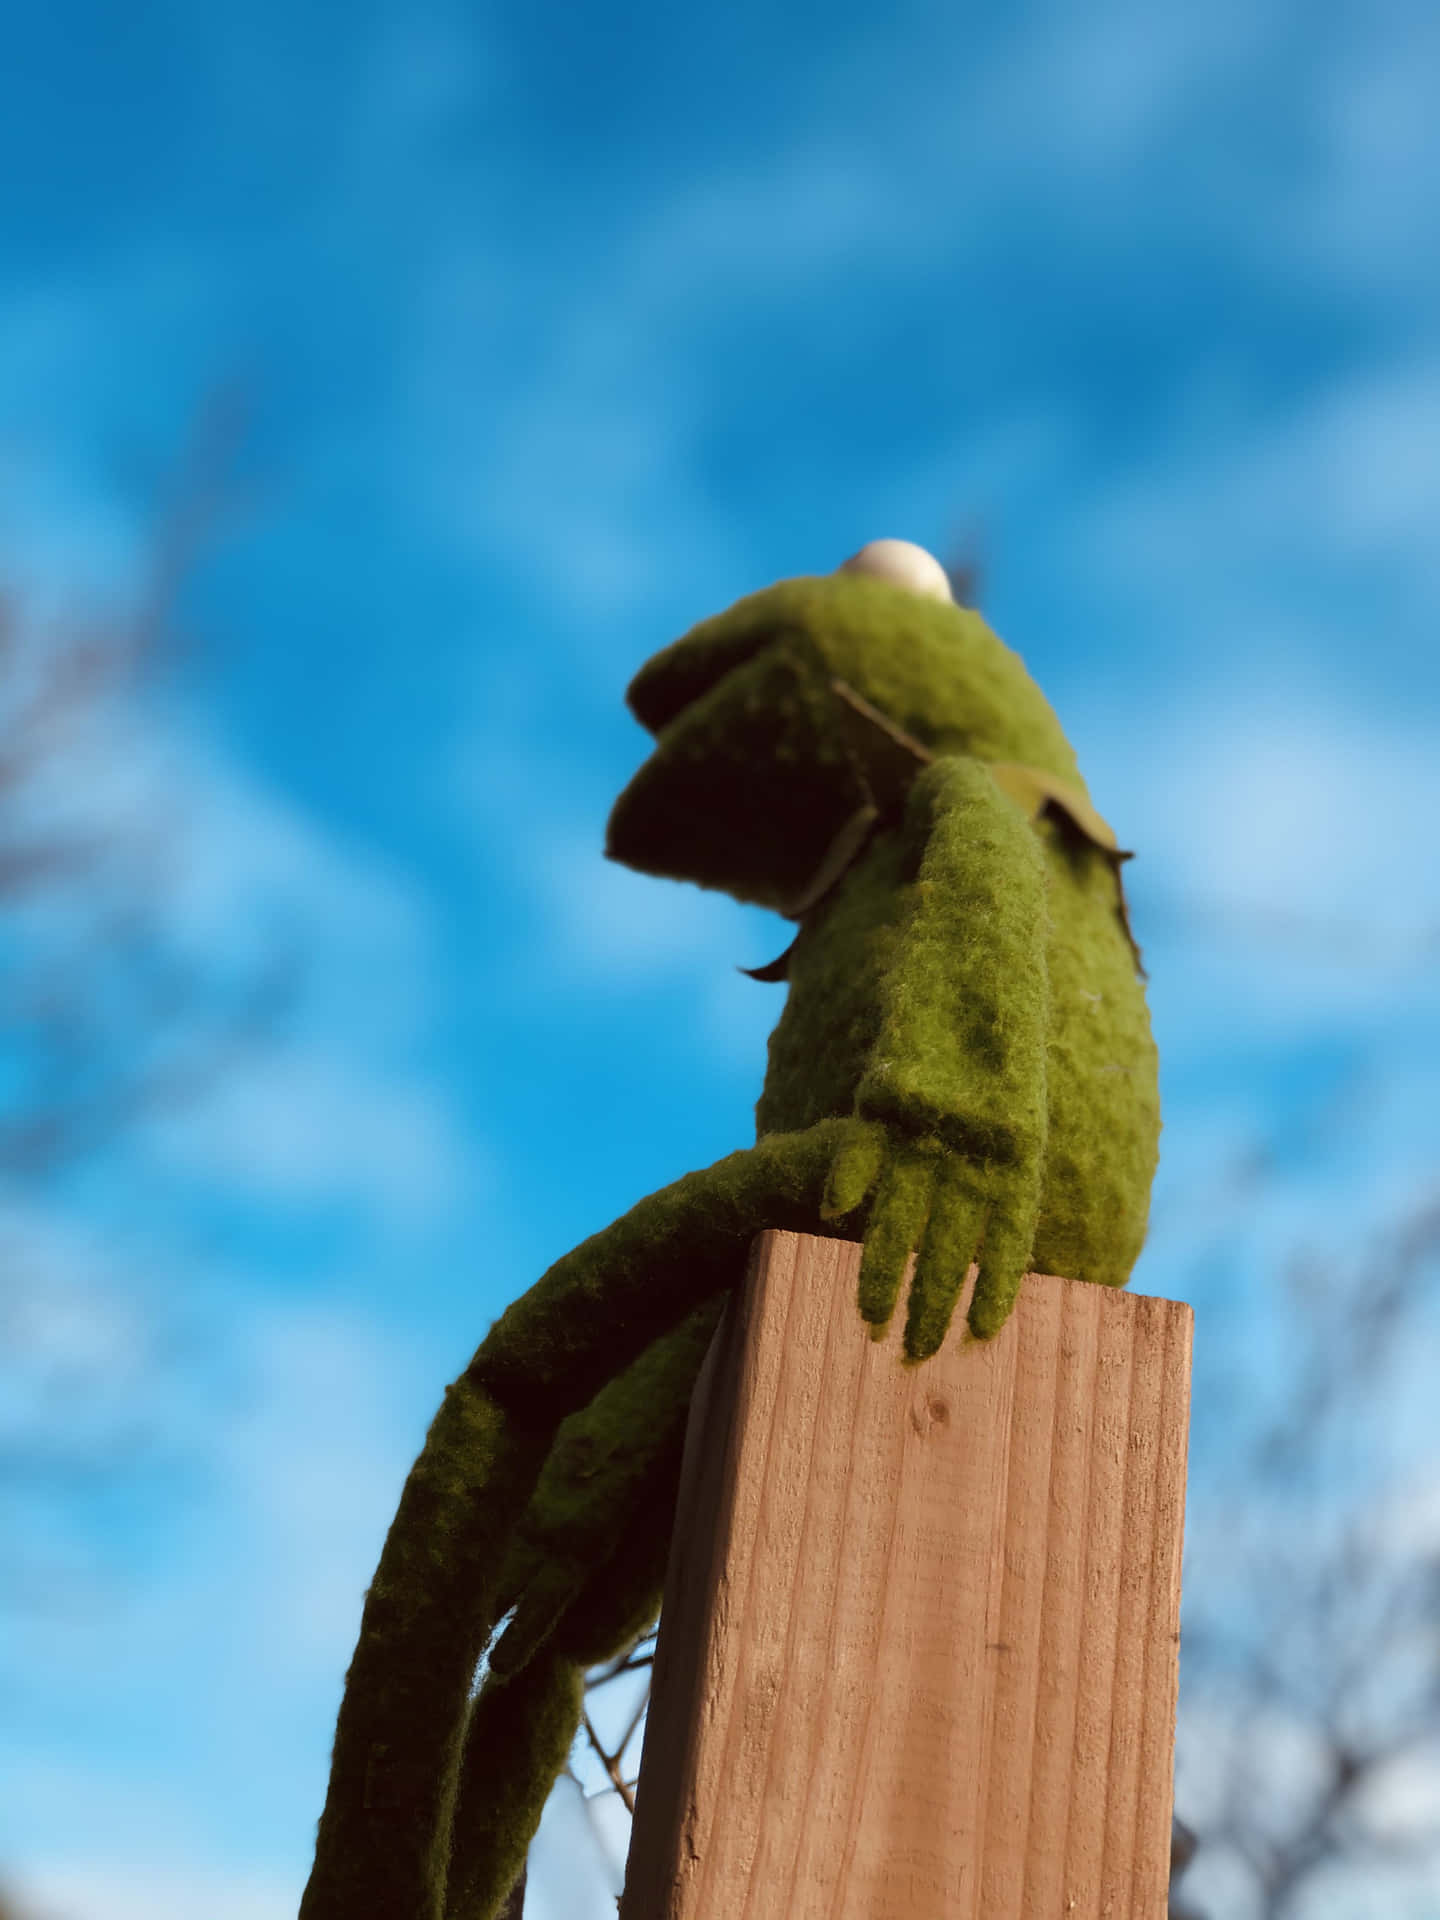 Aesthetic Kermit On Wooden Post Wallpaper